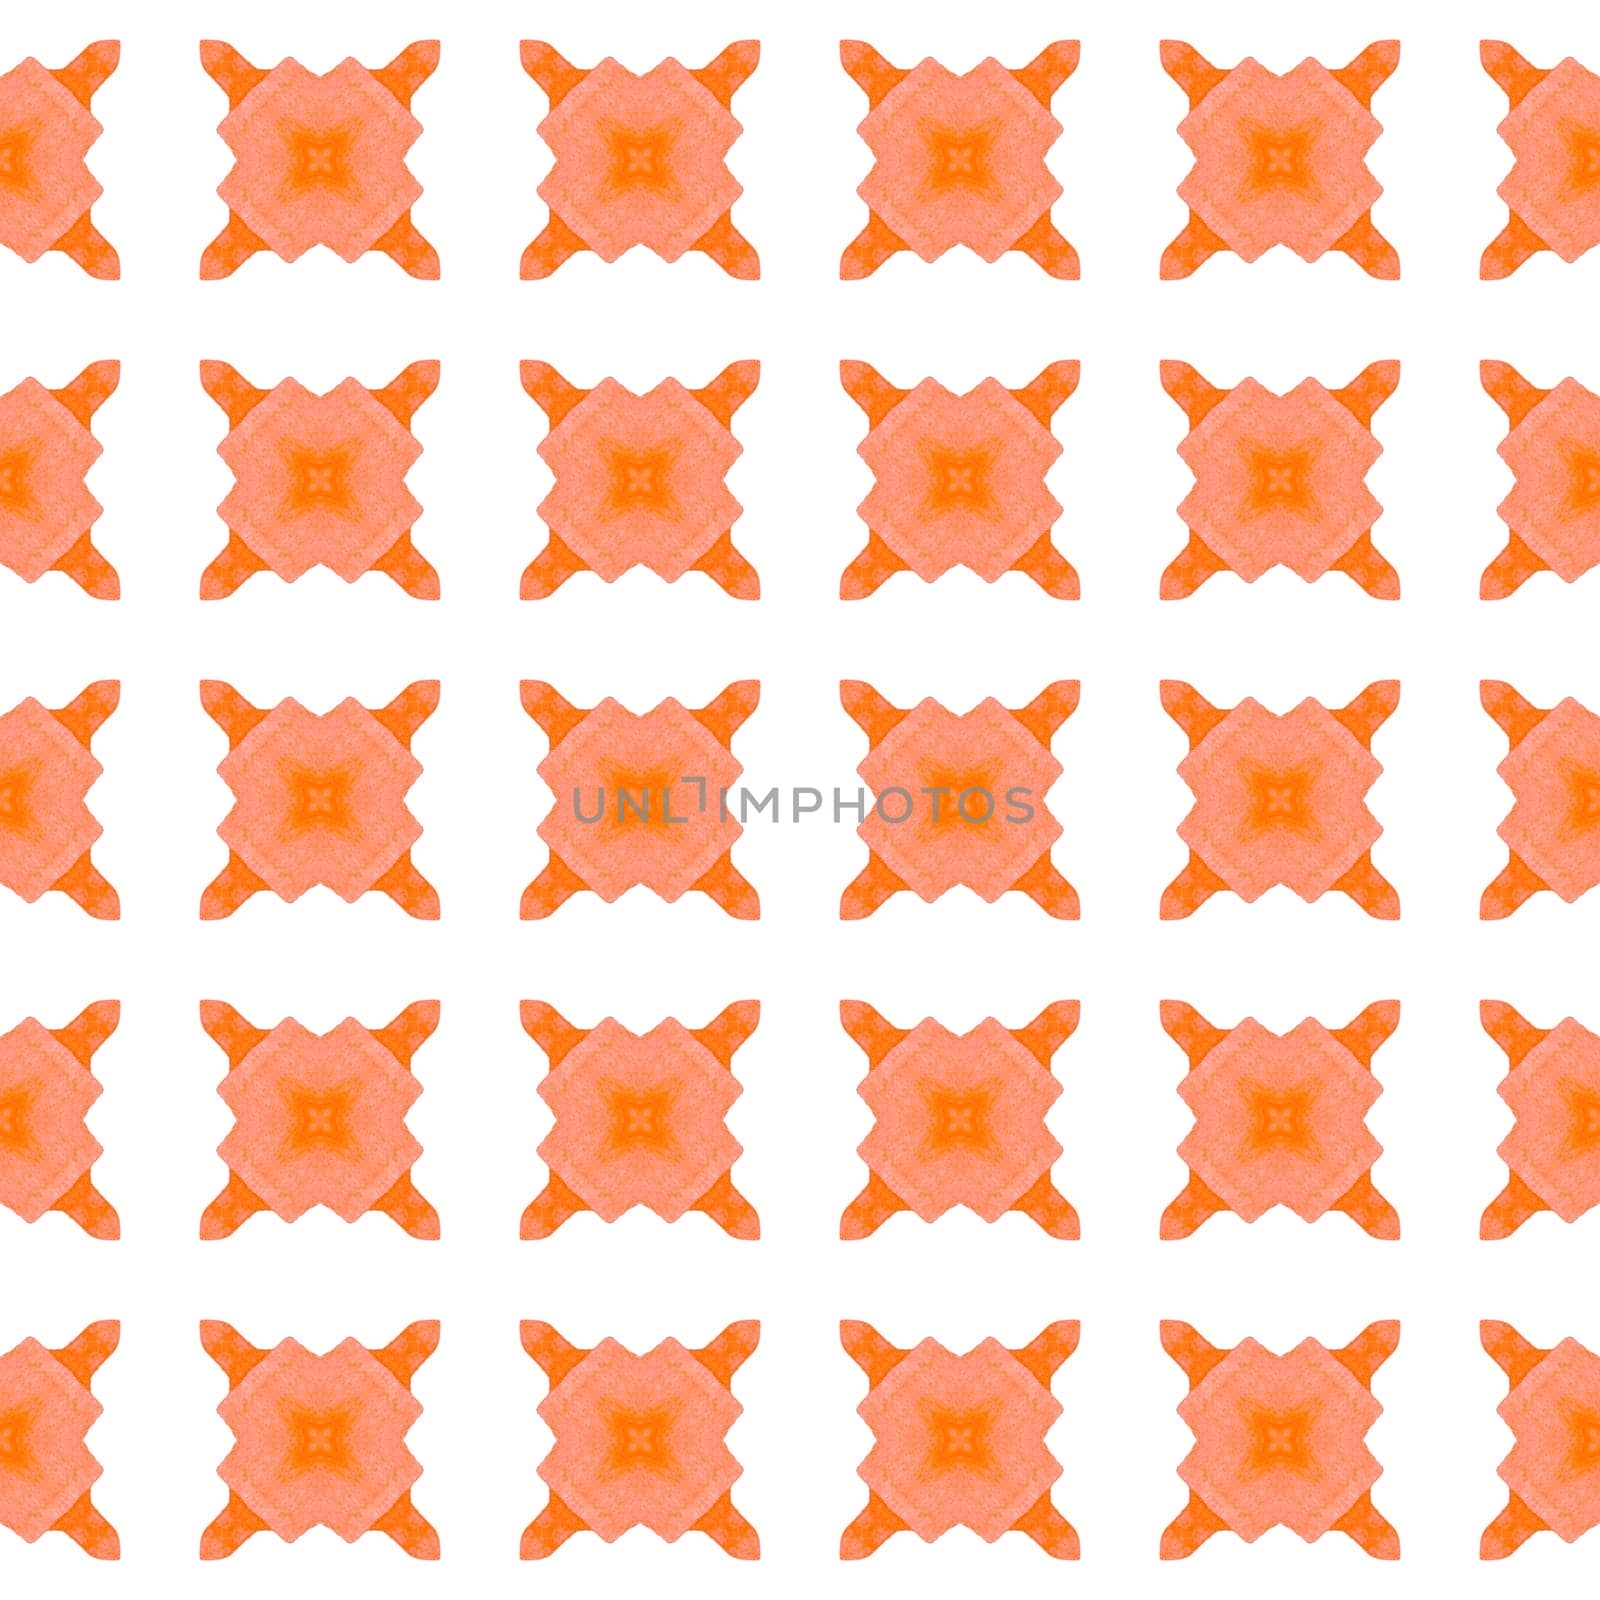 Striped hand drawn design. Orange classic boho chic summer design. Repeating striped hand drawn border. Textile ready fresh print, swimwear fabric, wallpaper, wrapping.